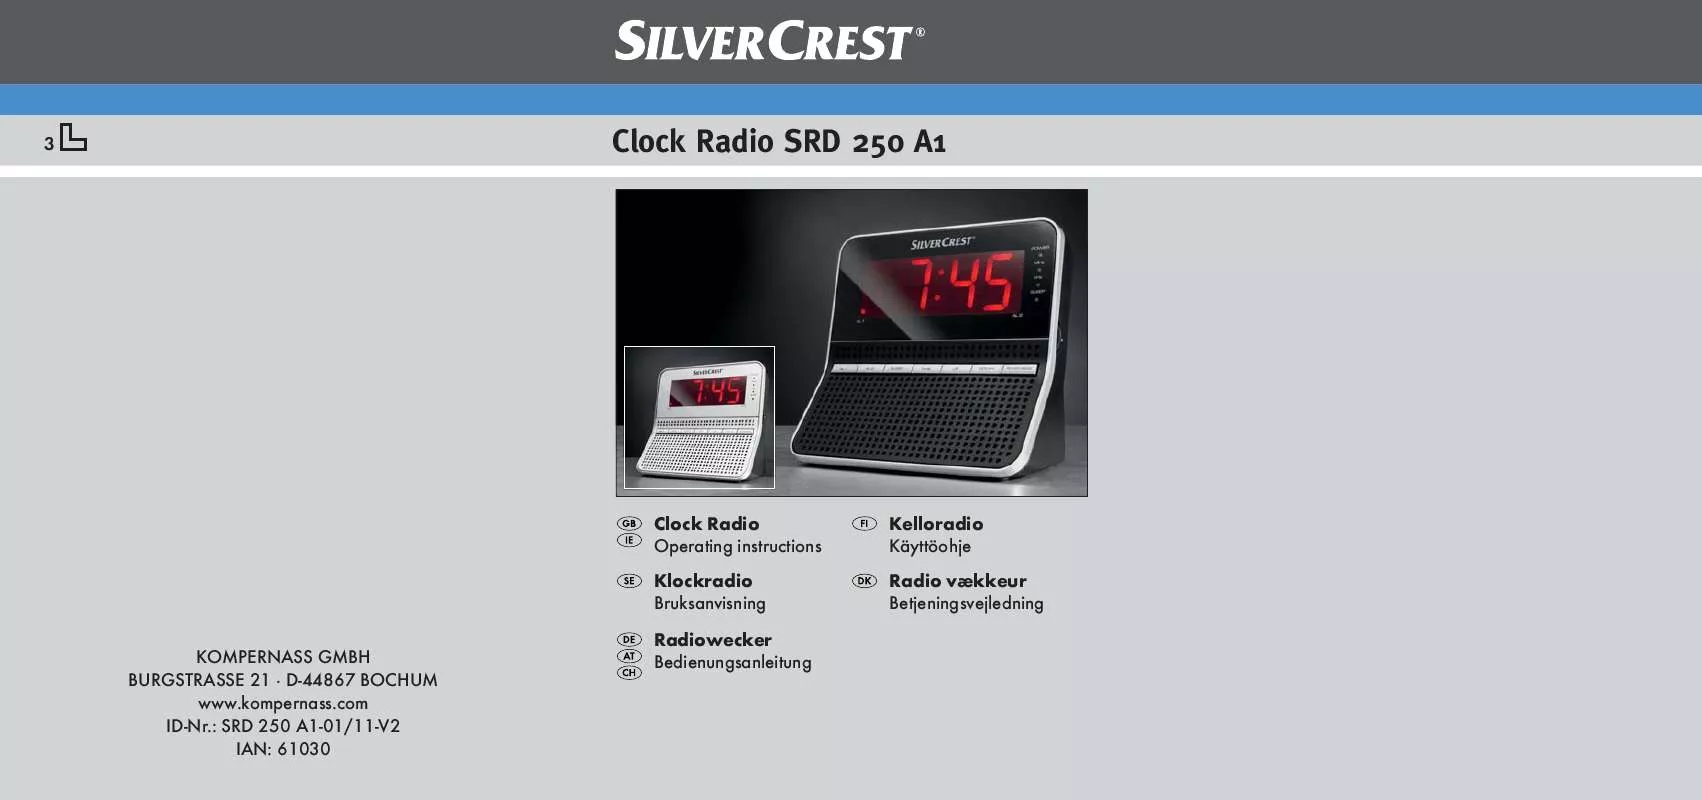 Mode d'emploi SILVERCREST SRD 250 A1 CLOCK RADIO